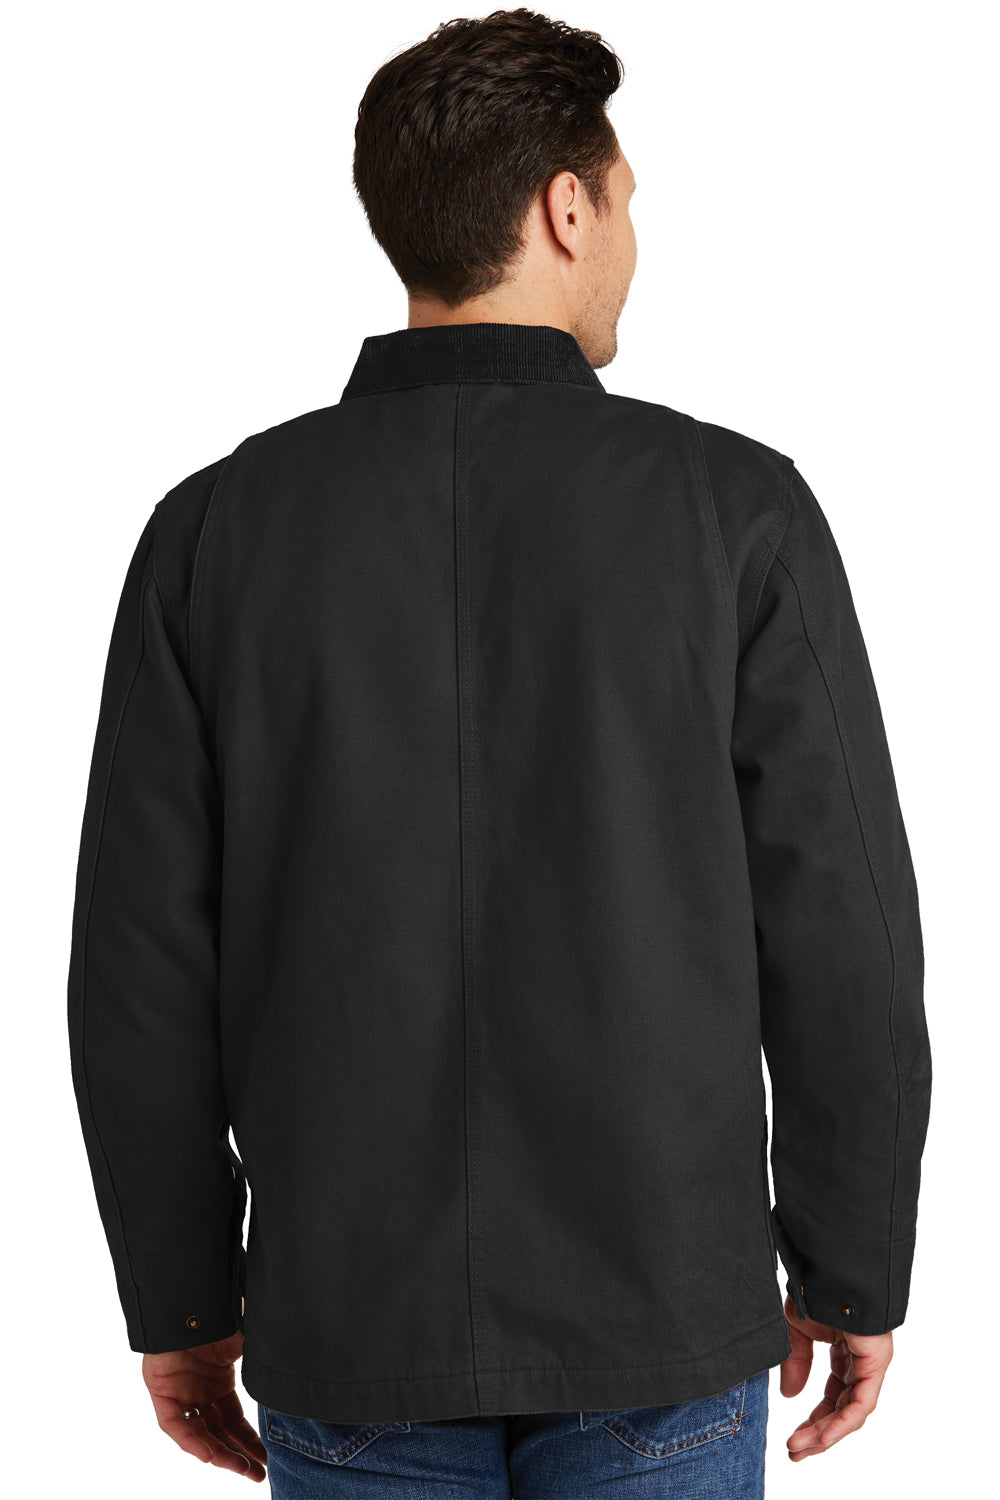 CornerStone CSJ50 Mens Duck Cloth Full Zip Jacket Black Back